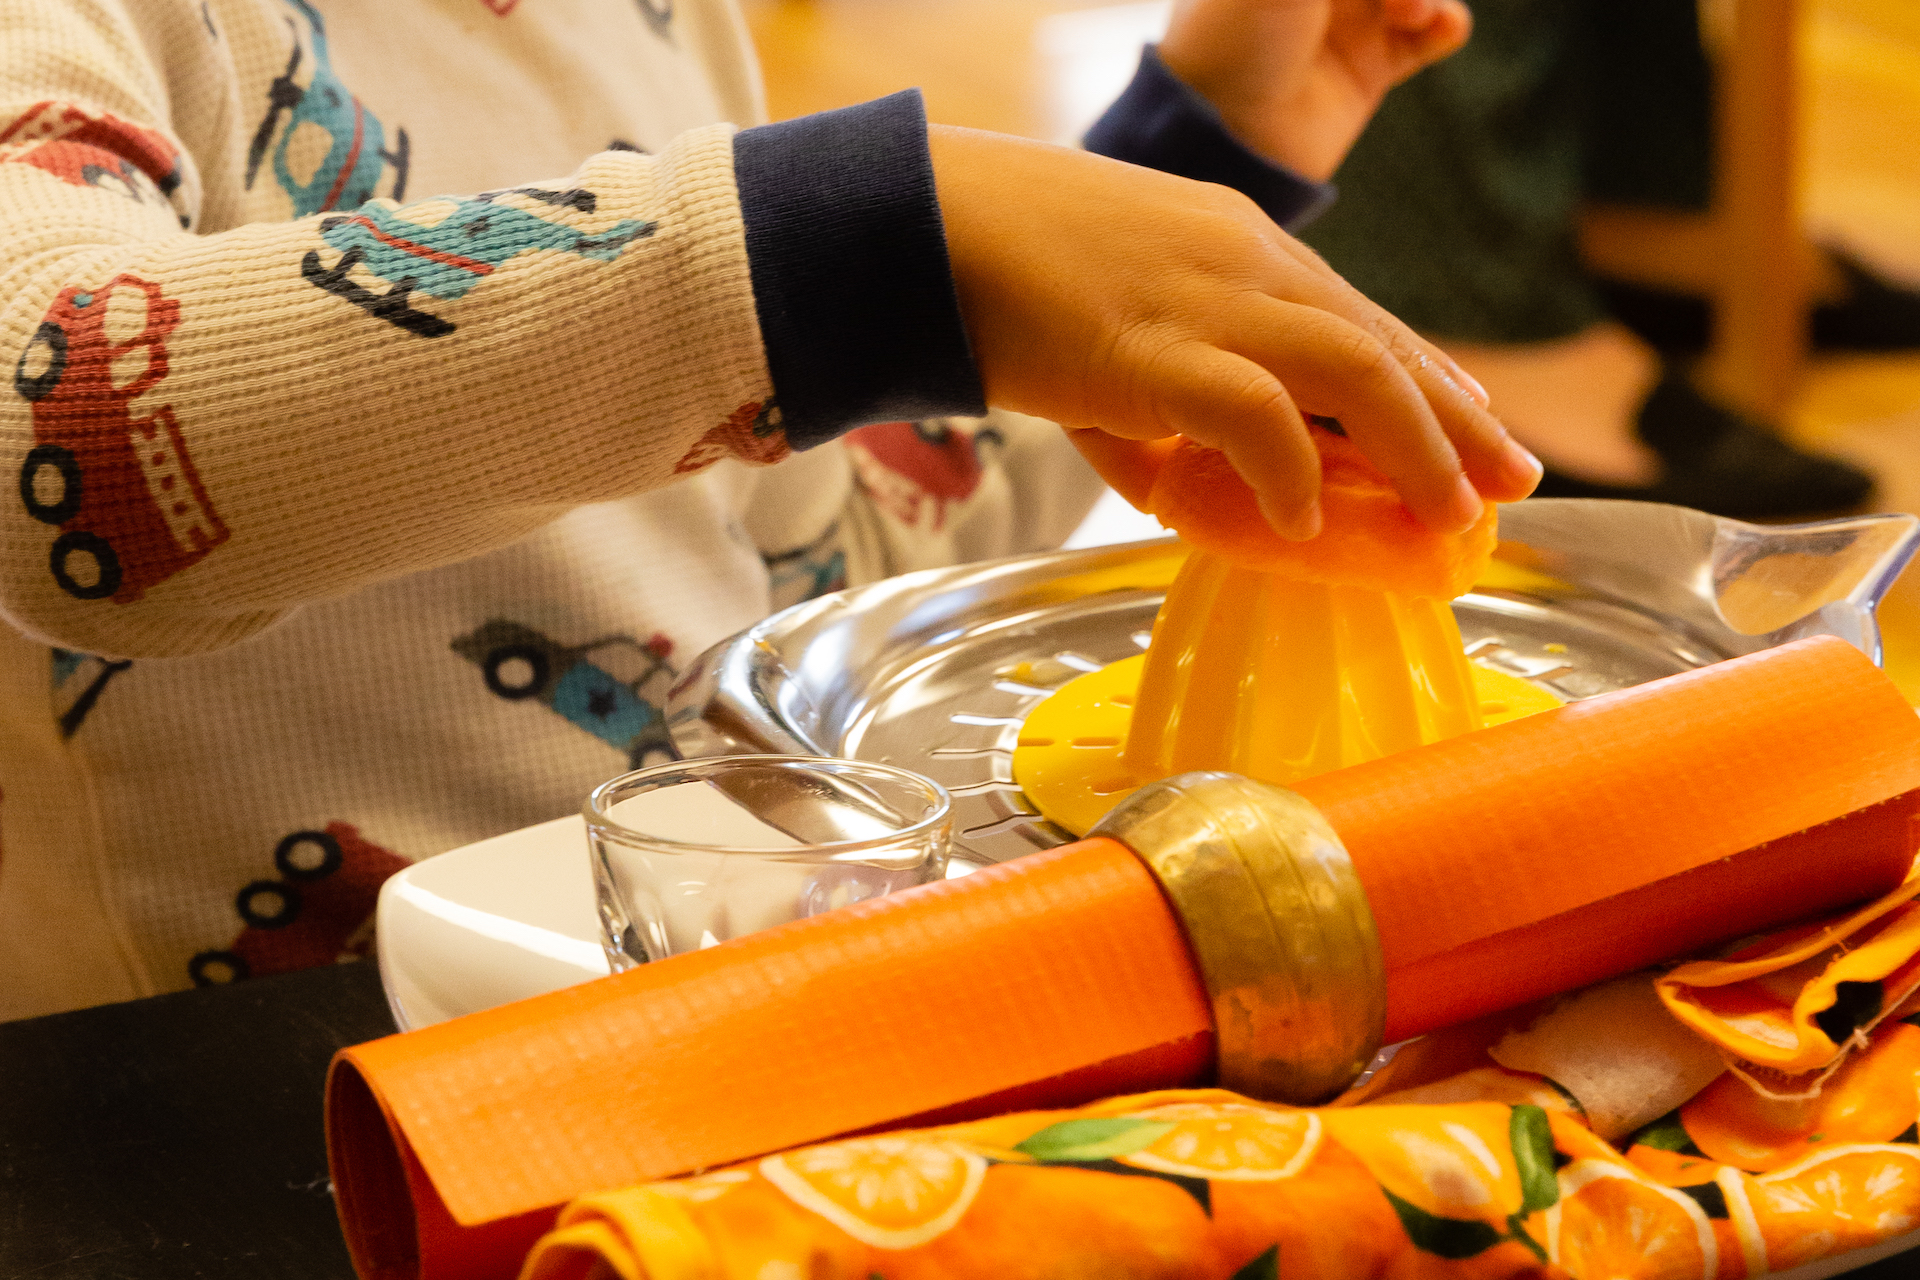 Child juicing an orange independently